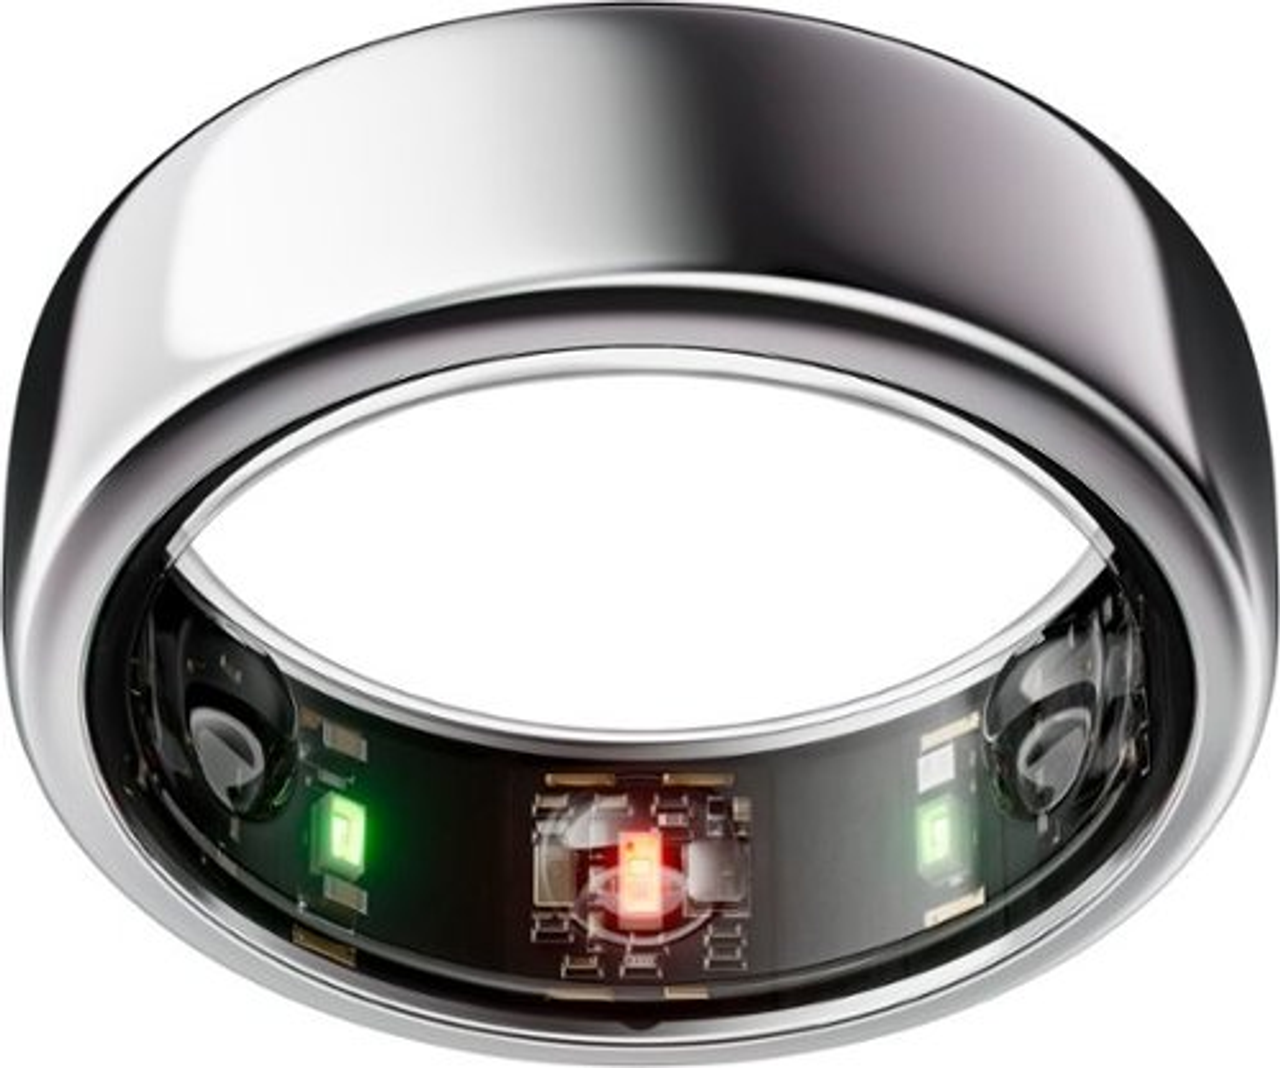 Oura Ring Gen3 - Horizon - Size 7 - Silver